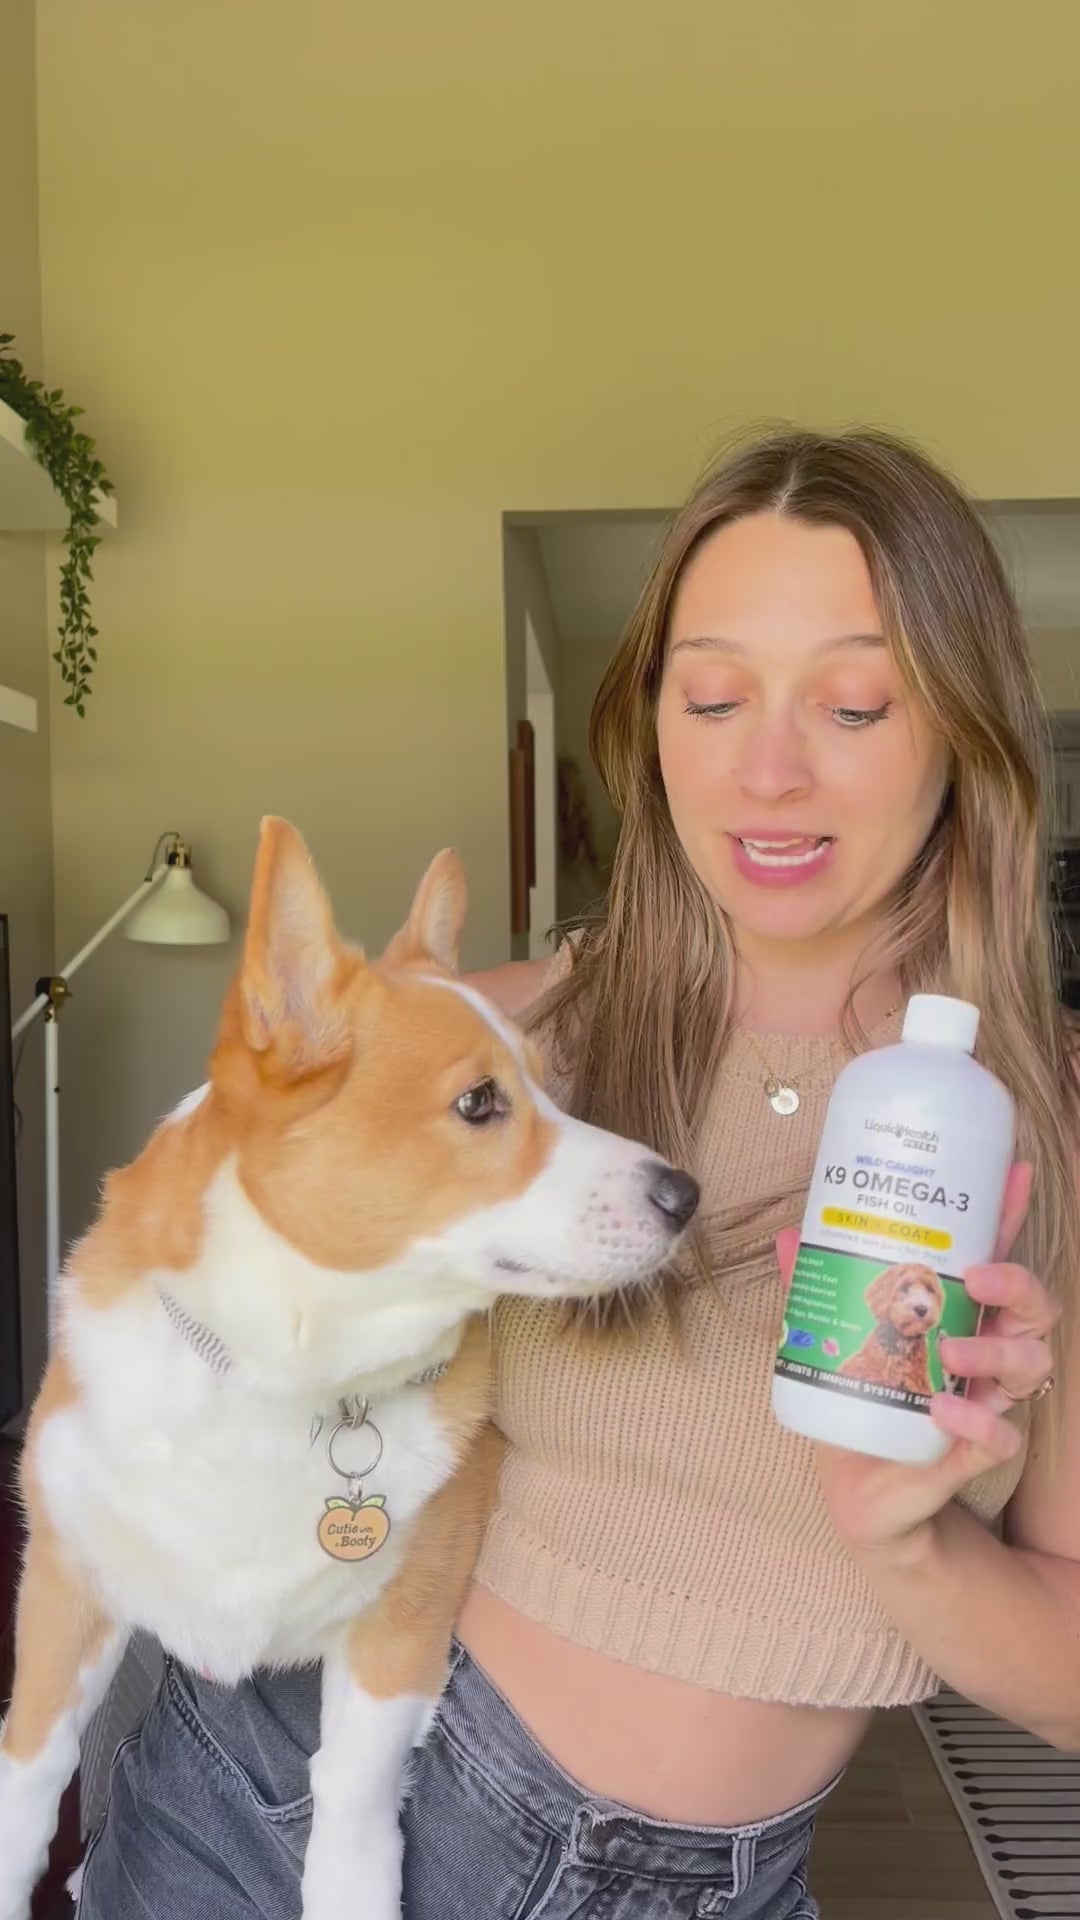 K9 Omega-3 Fish Oil For Dogs – Liquid Health Pets